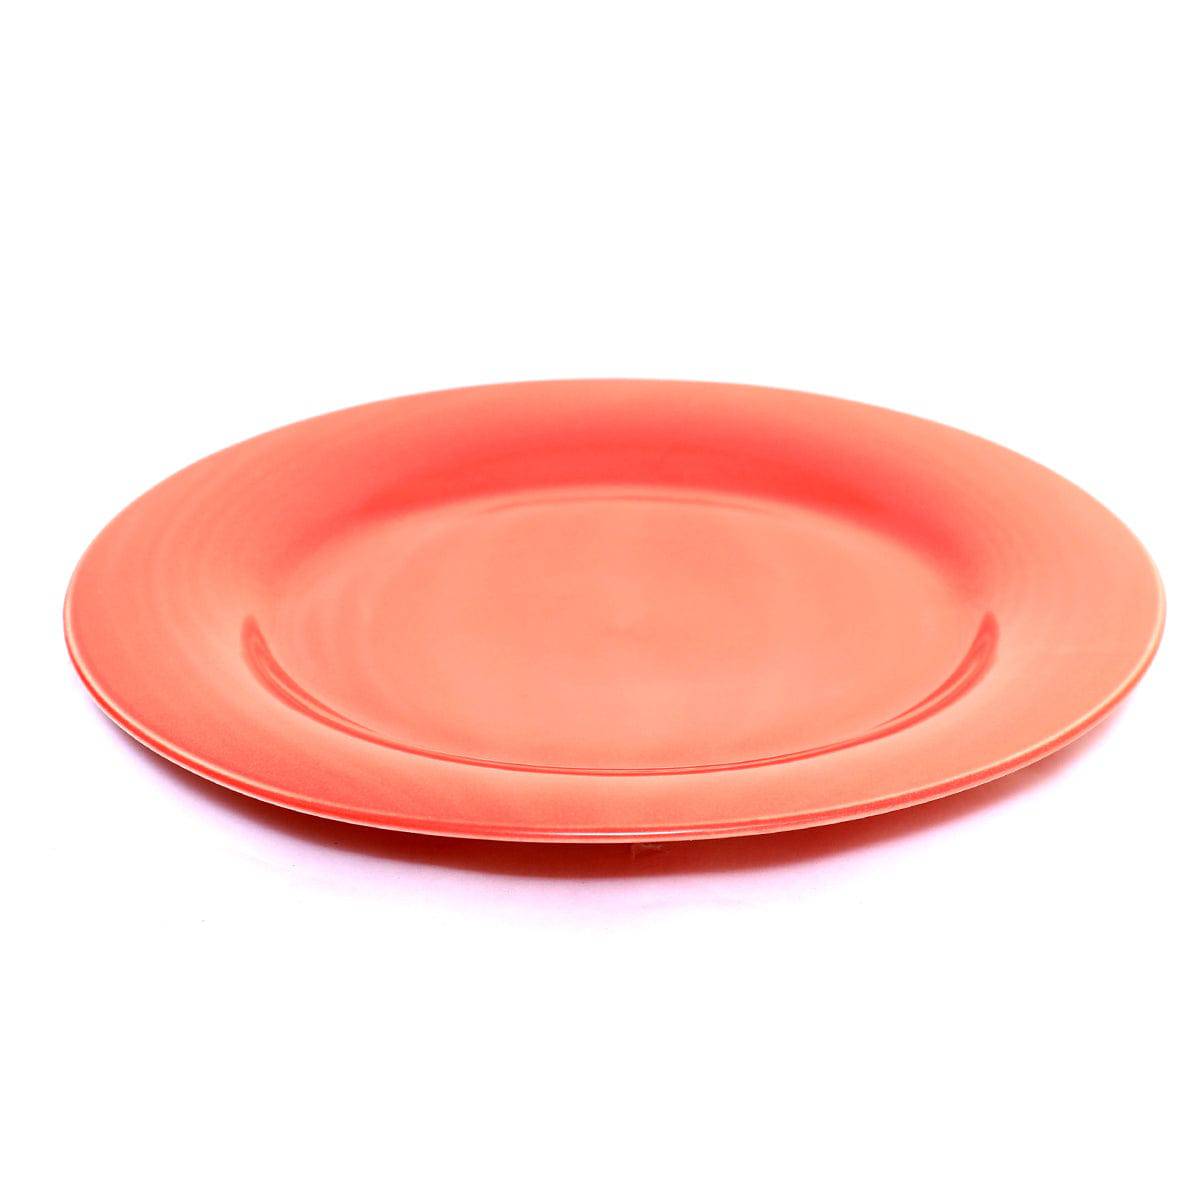 Dinner Plate Rosewood Pink 813009 R01